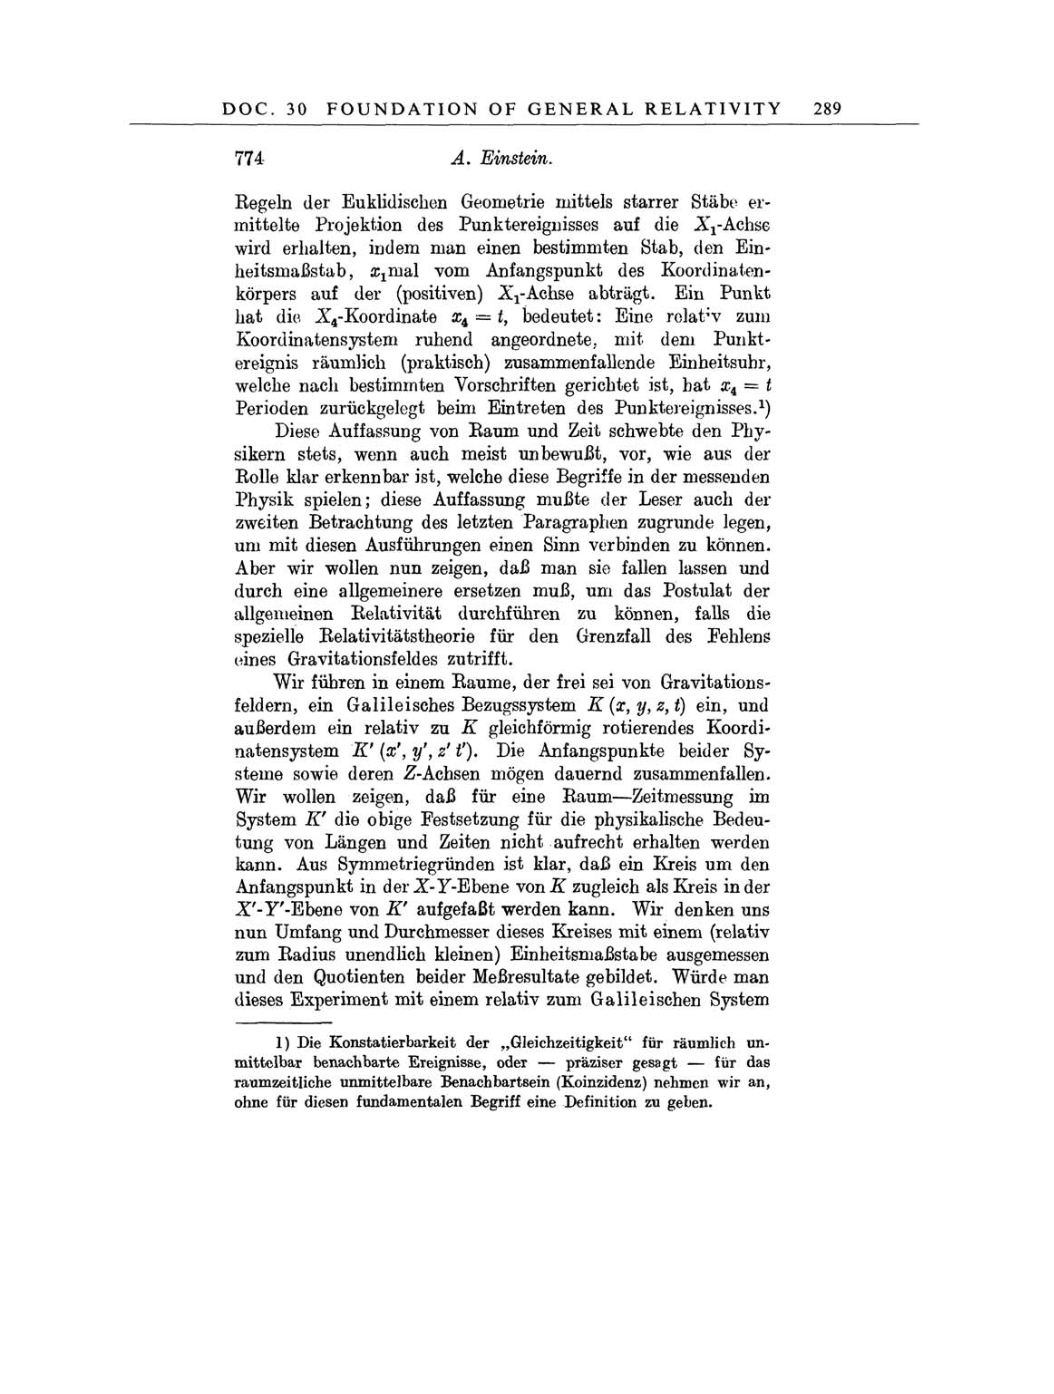 Volume 6: The Berlin Years: Writings, 1914-1917 page 289